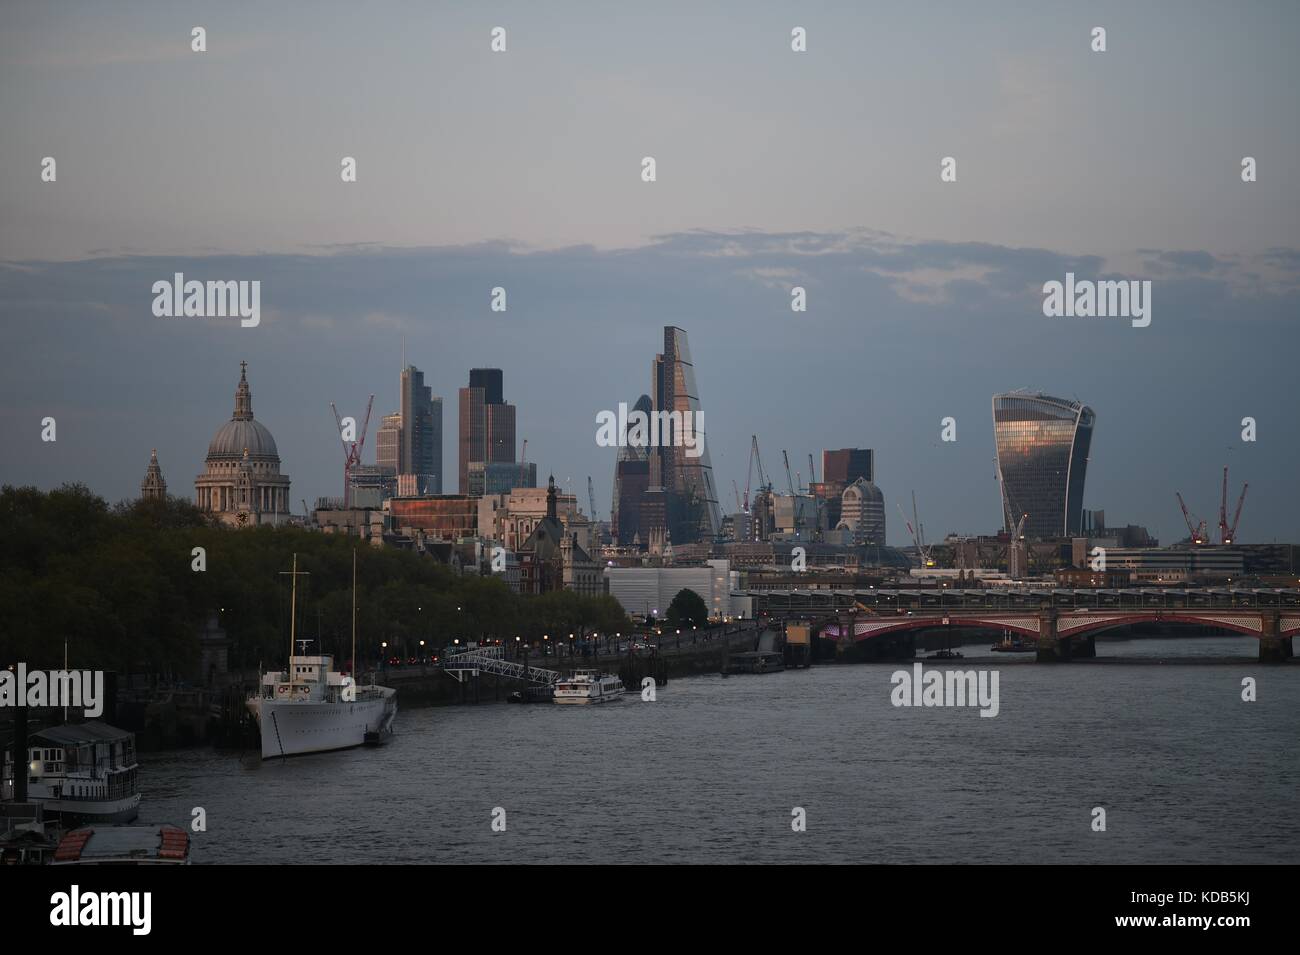 London Skyline at night Stock Photo - Alamy